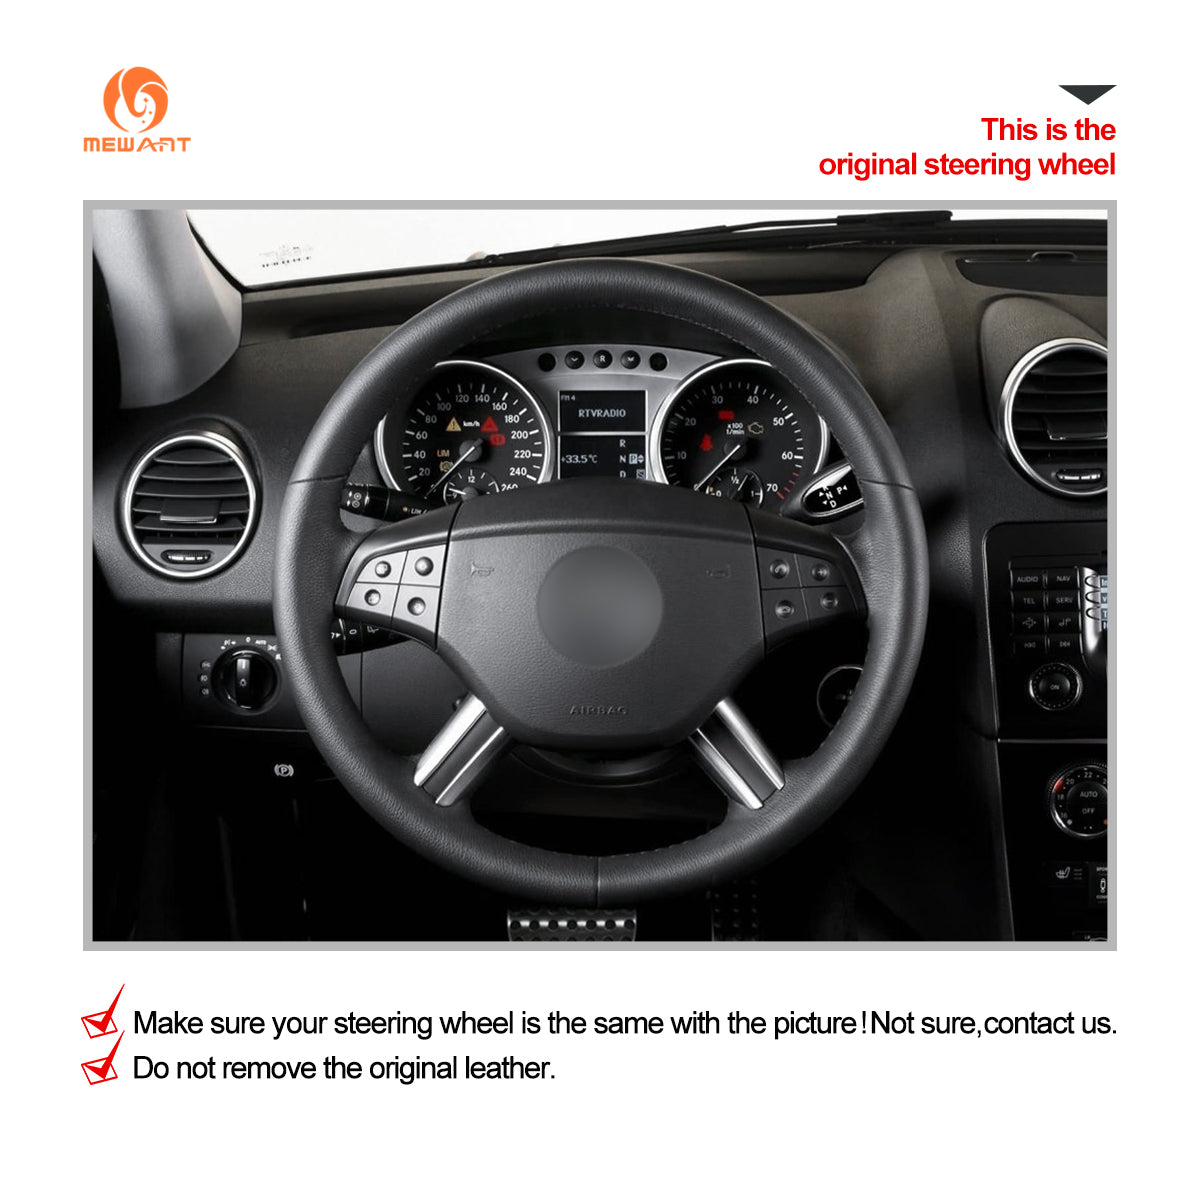 MEWANT Car Steering Wheel Cover for Mercedes Benz GL-Class X164 2006-2009 / M-Class W164 2005-2008 / R-Class 2006-2009